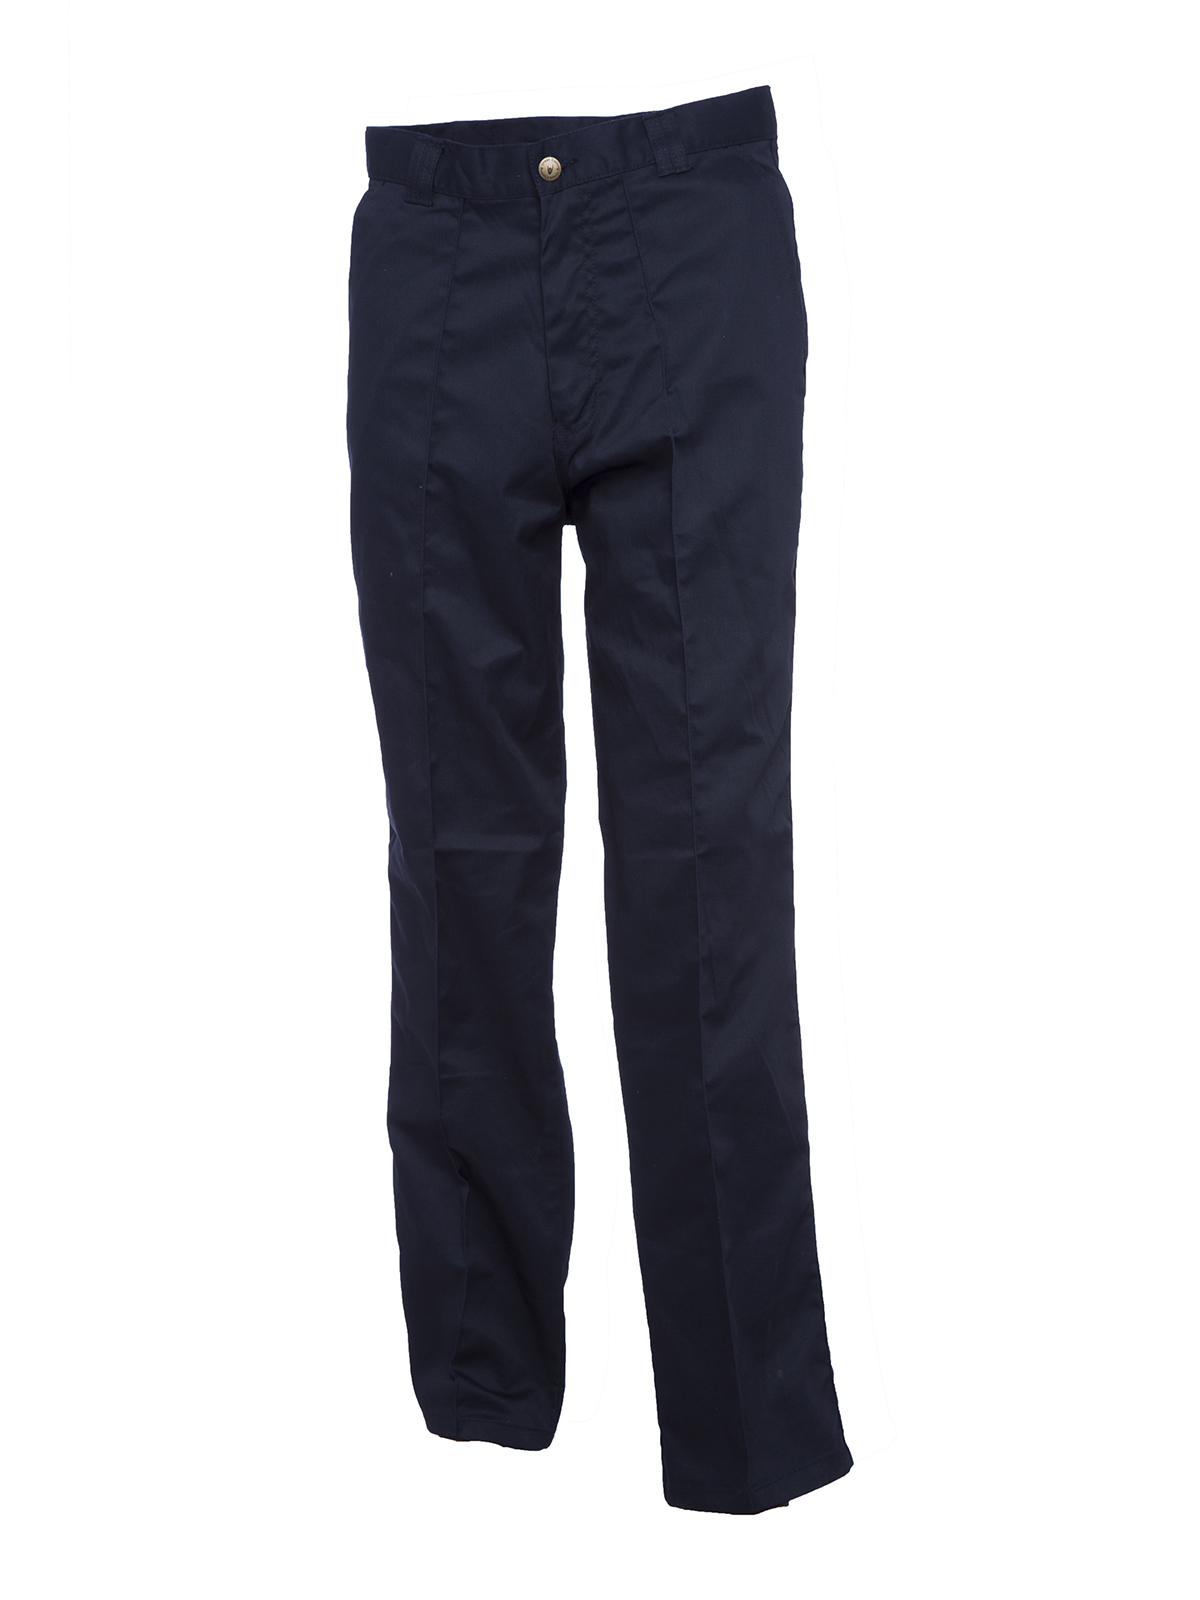 Workwear Trousers, Navy Blue - 34L